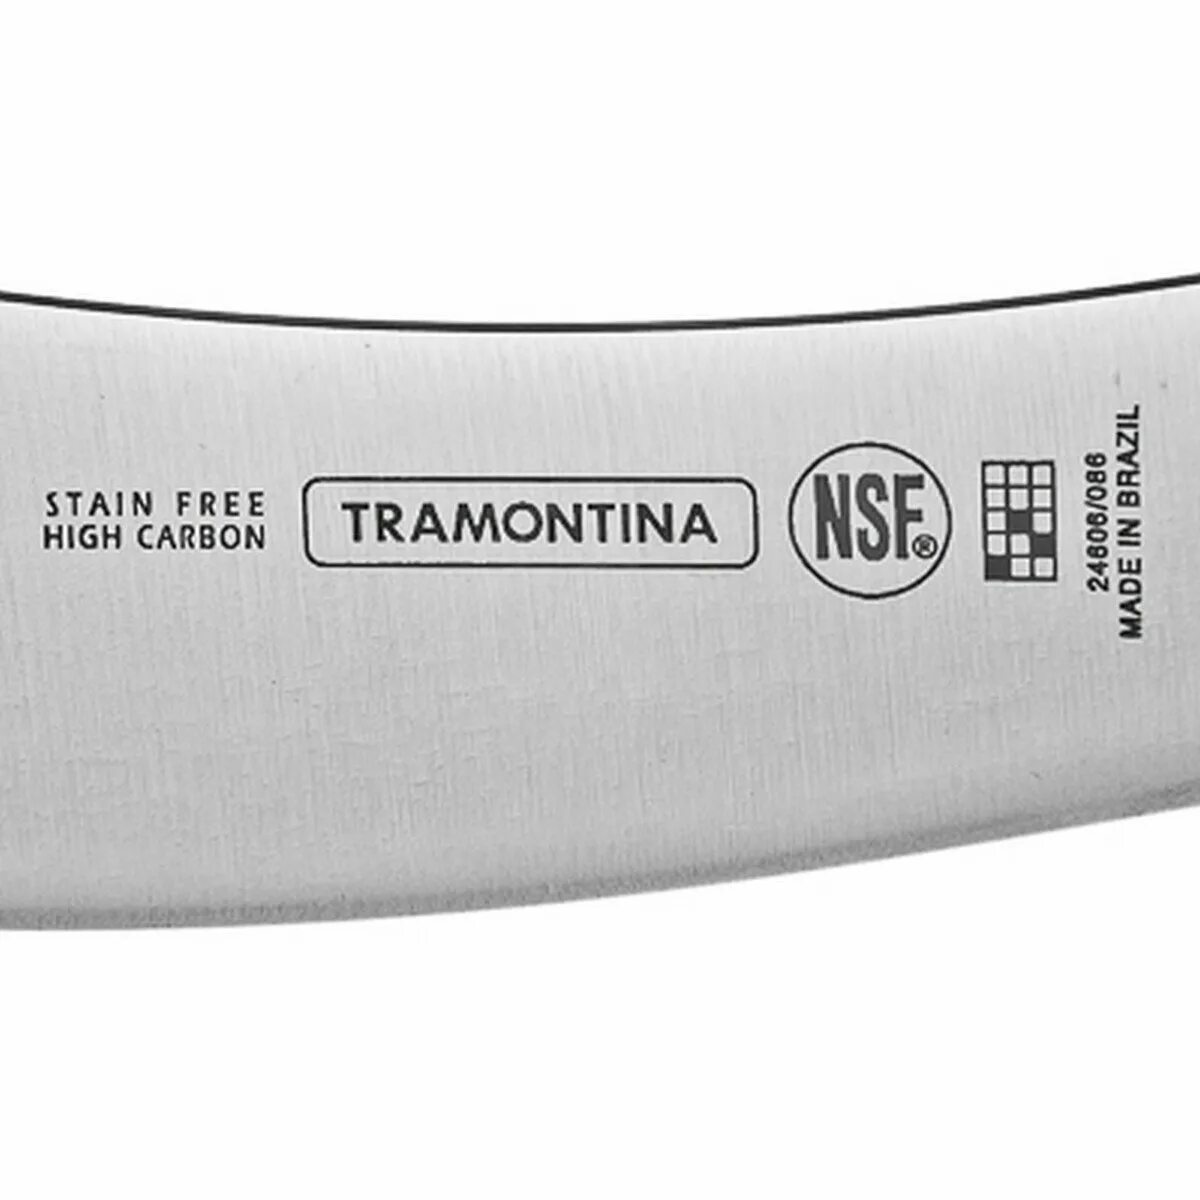 Tramontina professional Master нож для разделки туши 15см 24606/086. Tramontina кухонный нож 15 см professional Master. Нож Трамонтина 24610/086. Нож 24610/086 Tramontina.